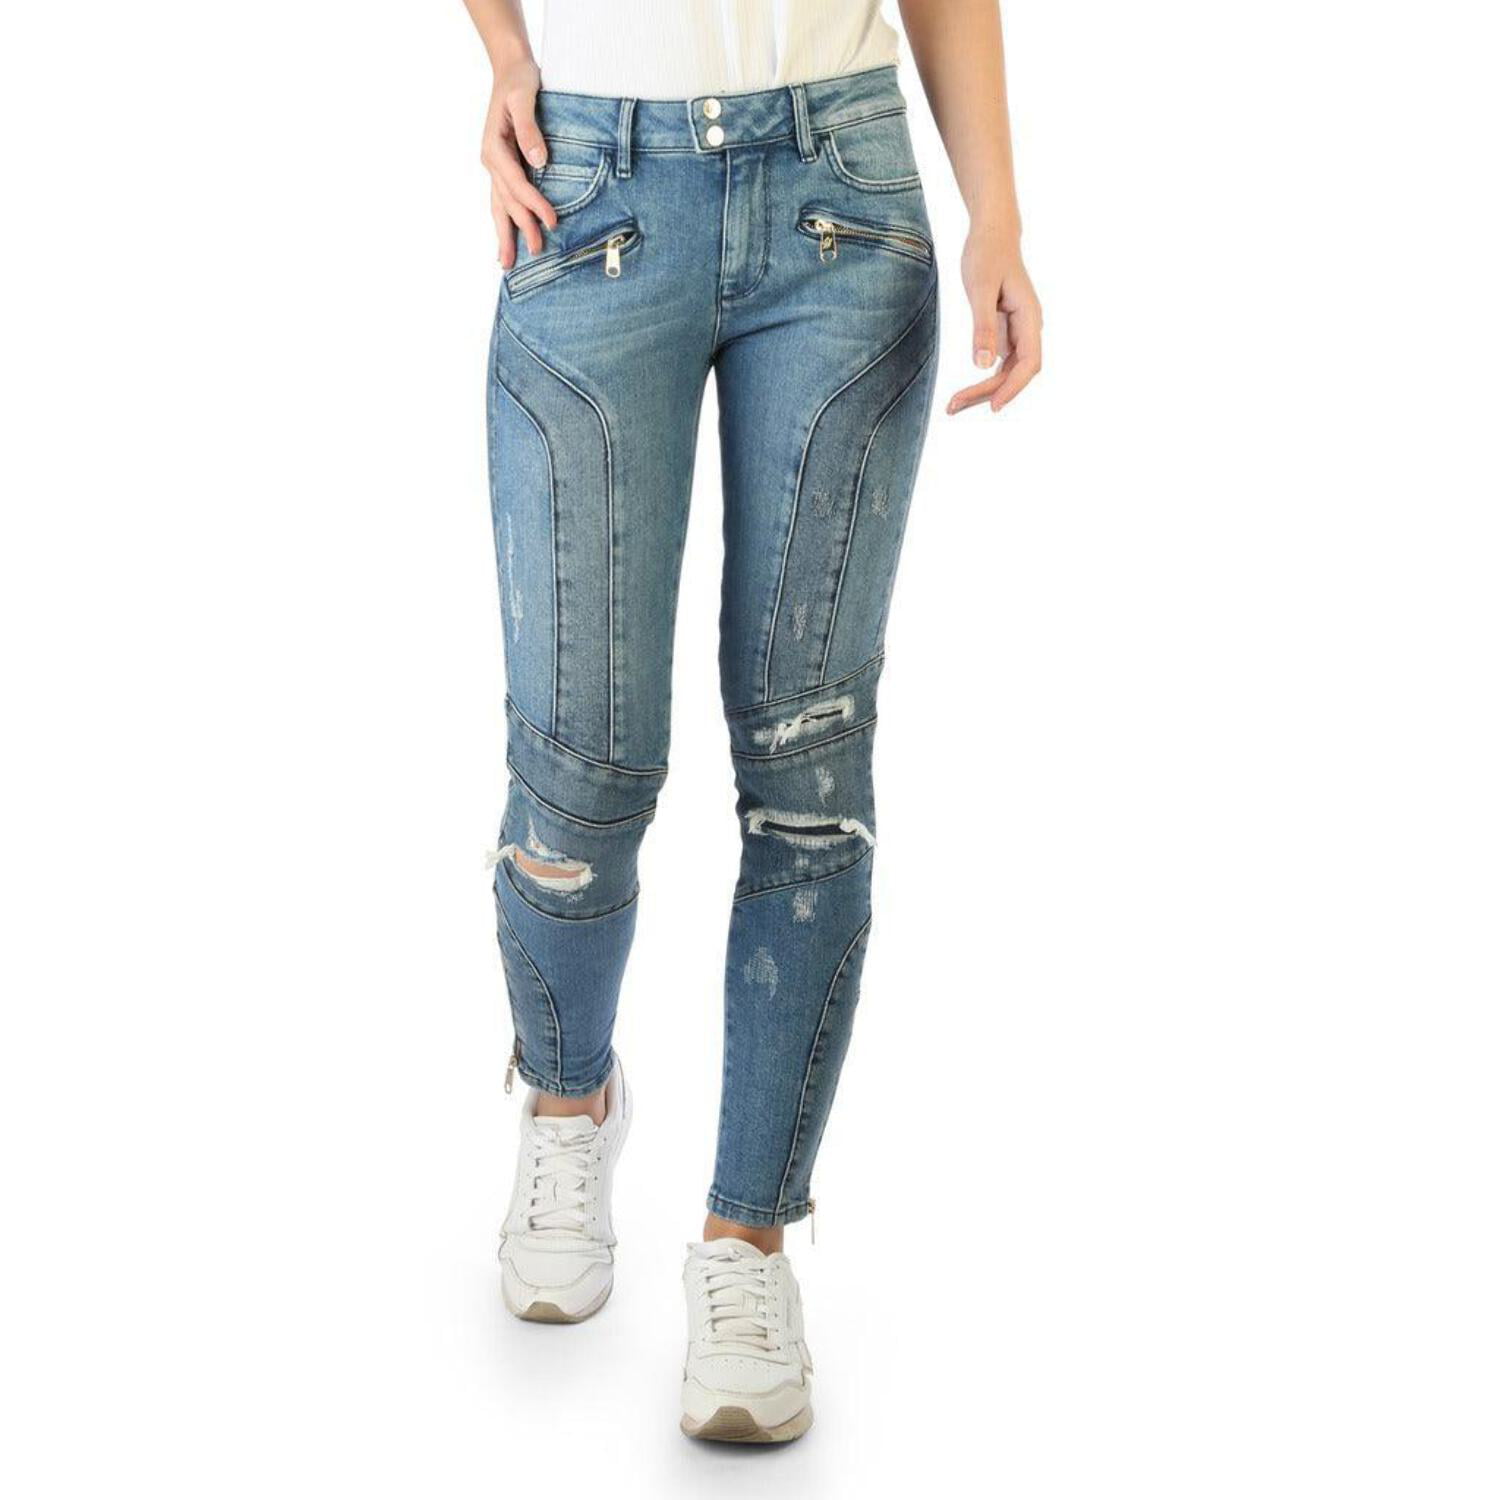 Tommy Hilfiger Women's Gigi Hadid Destroyed Moto Jeans US 6 Denim Walmart.com